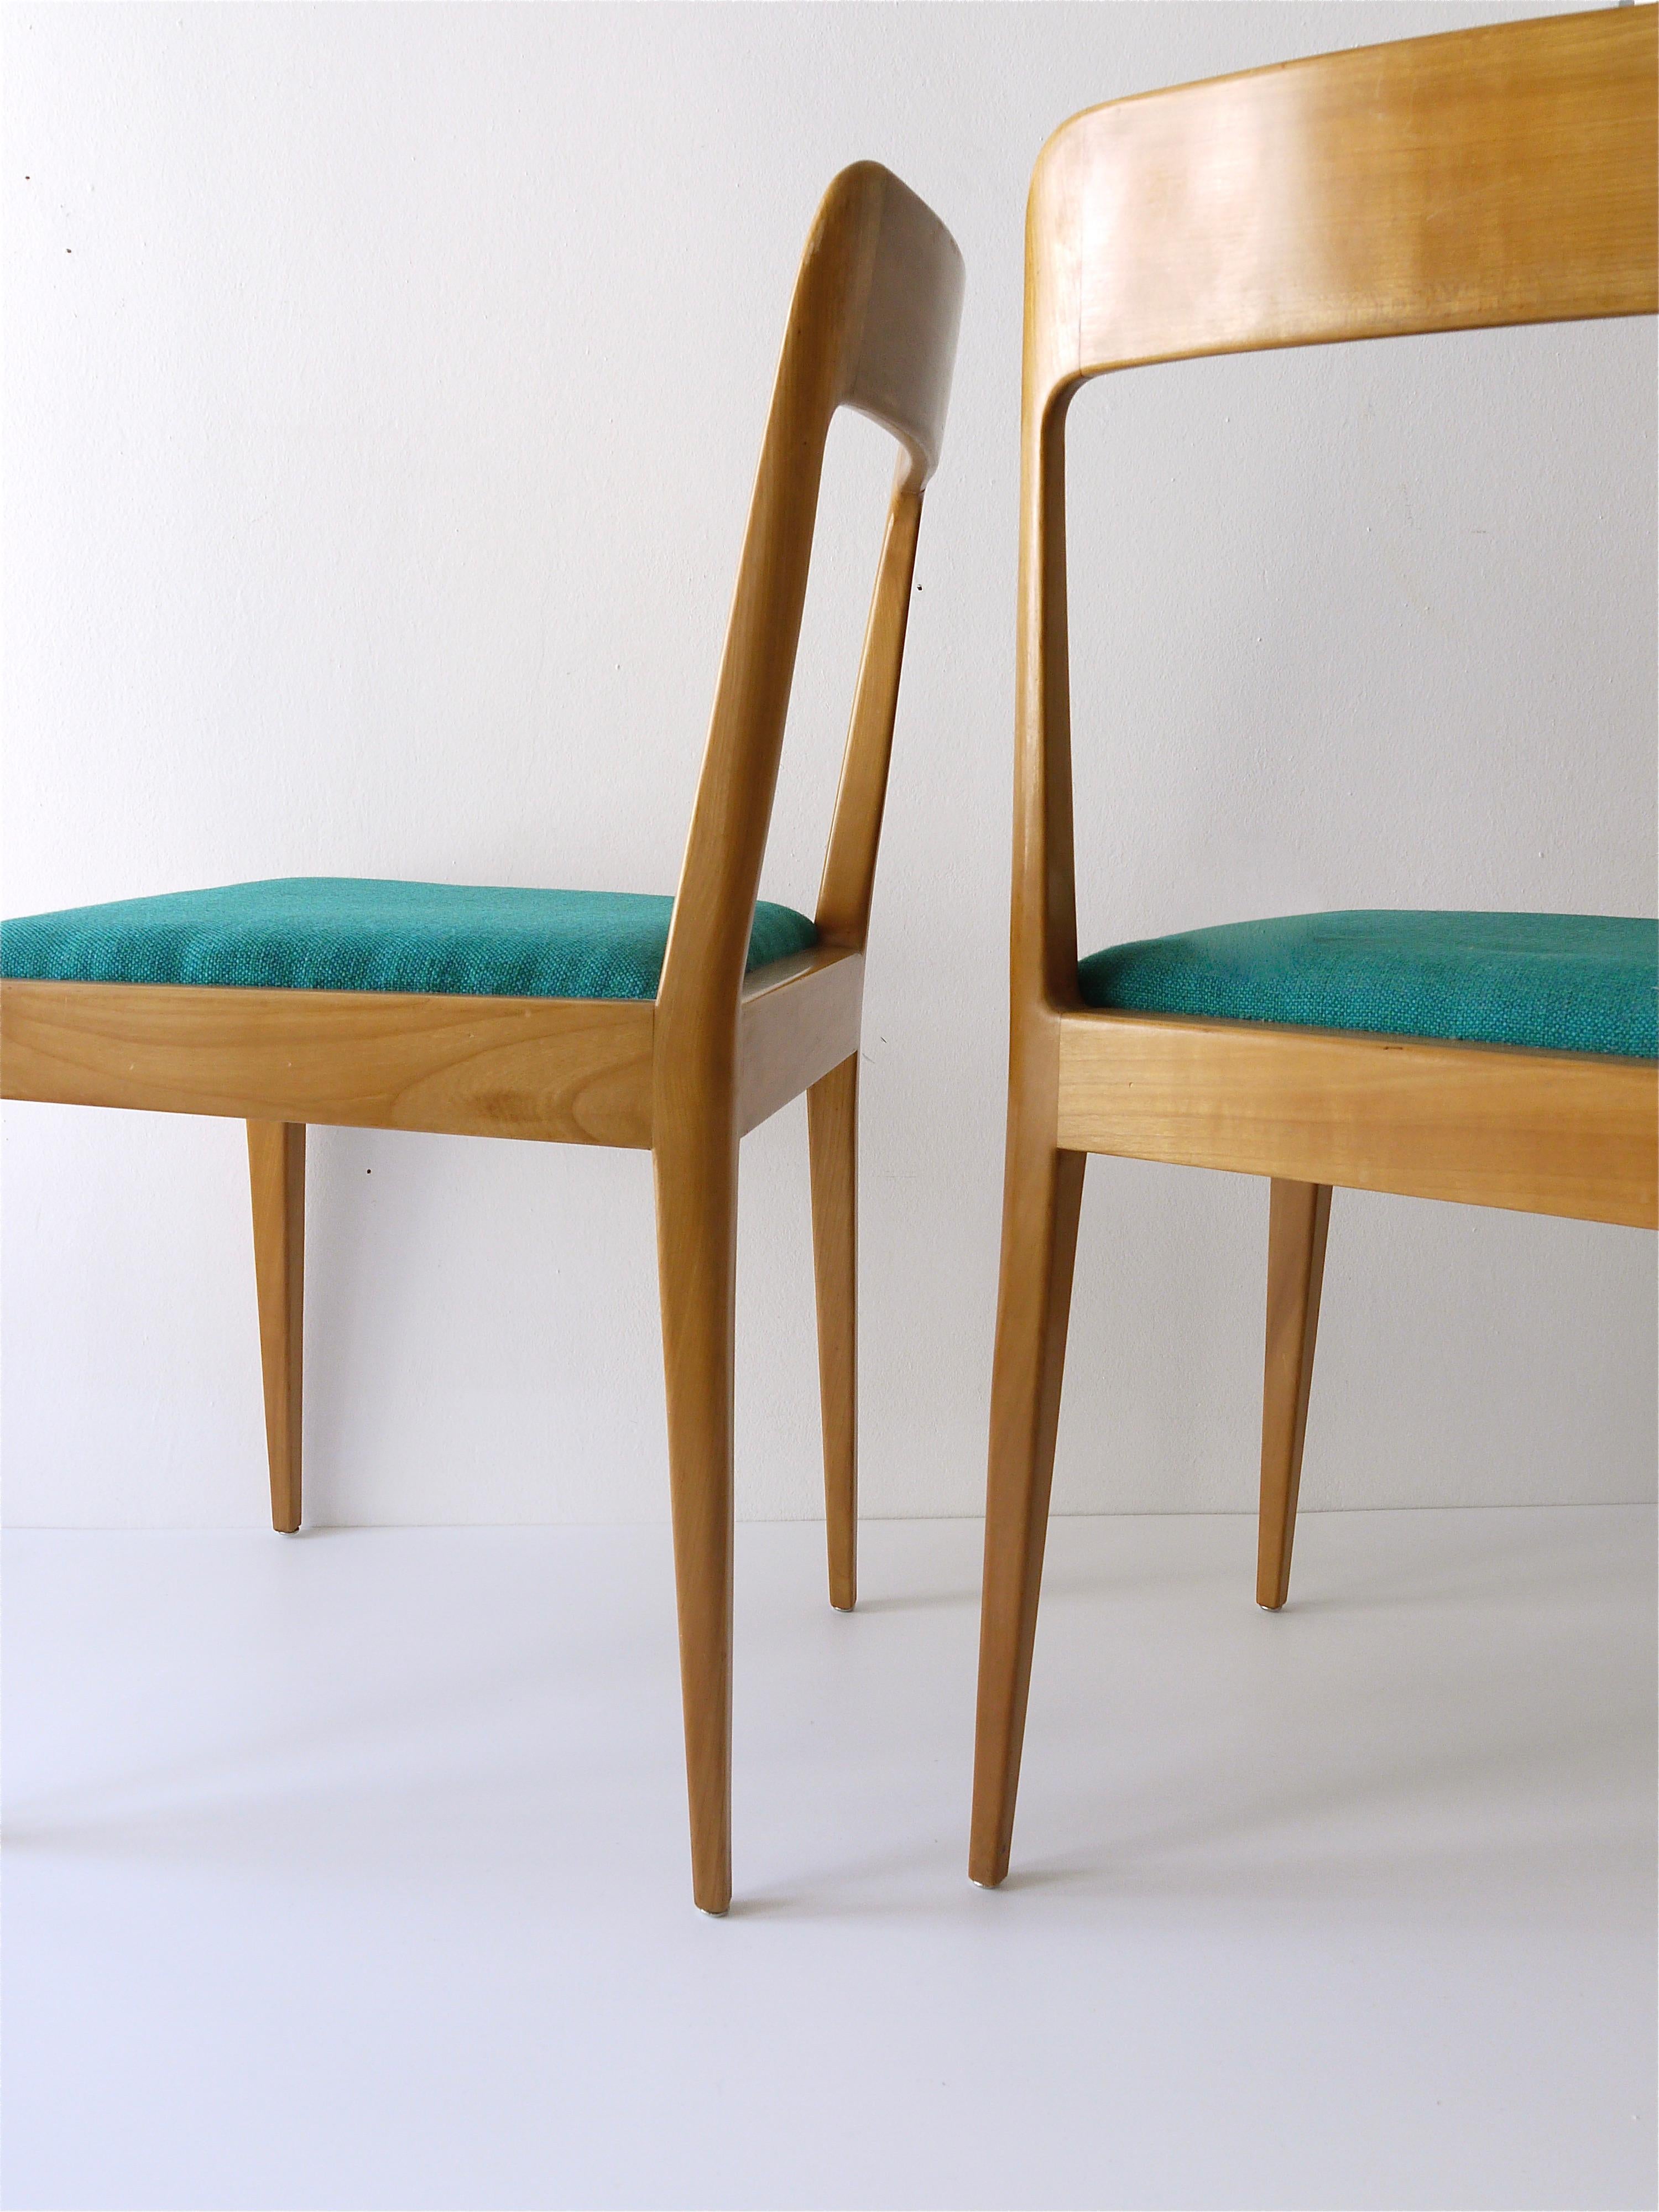 Four Carl Aubock Midcentury Walnut Chairs A7, Vienna, Austria, 1950s For Sale 3